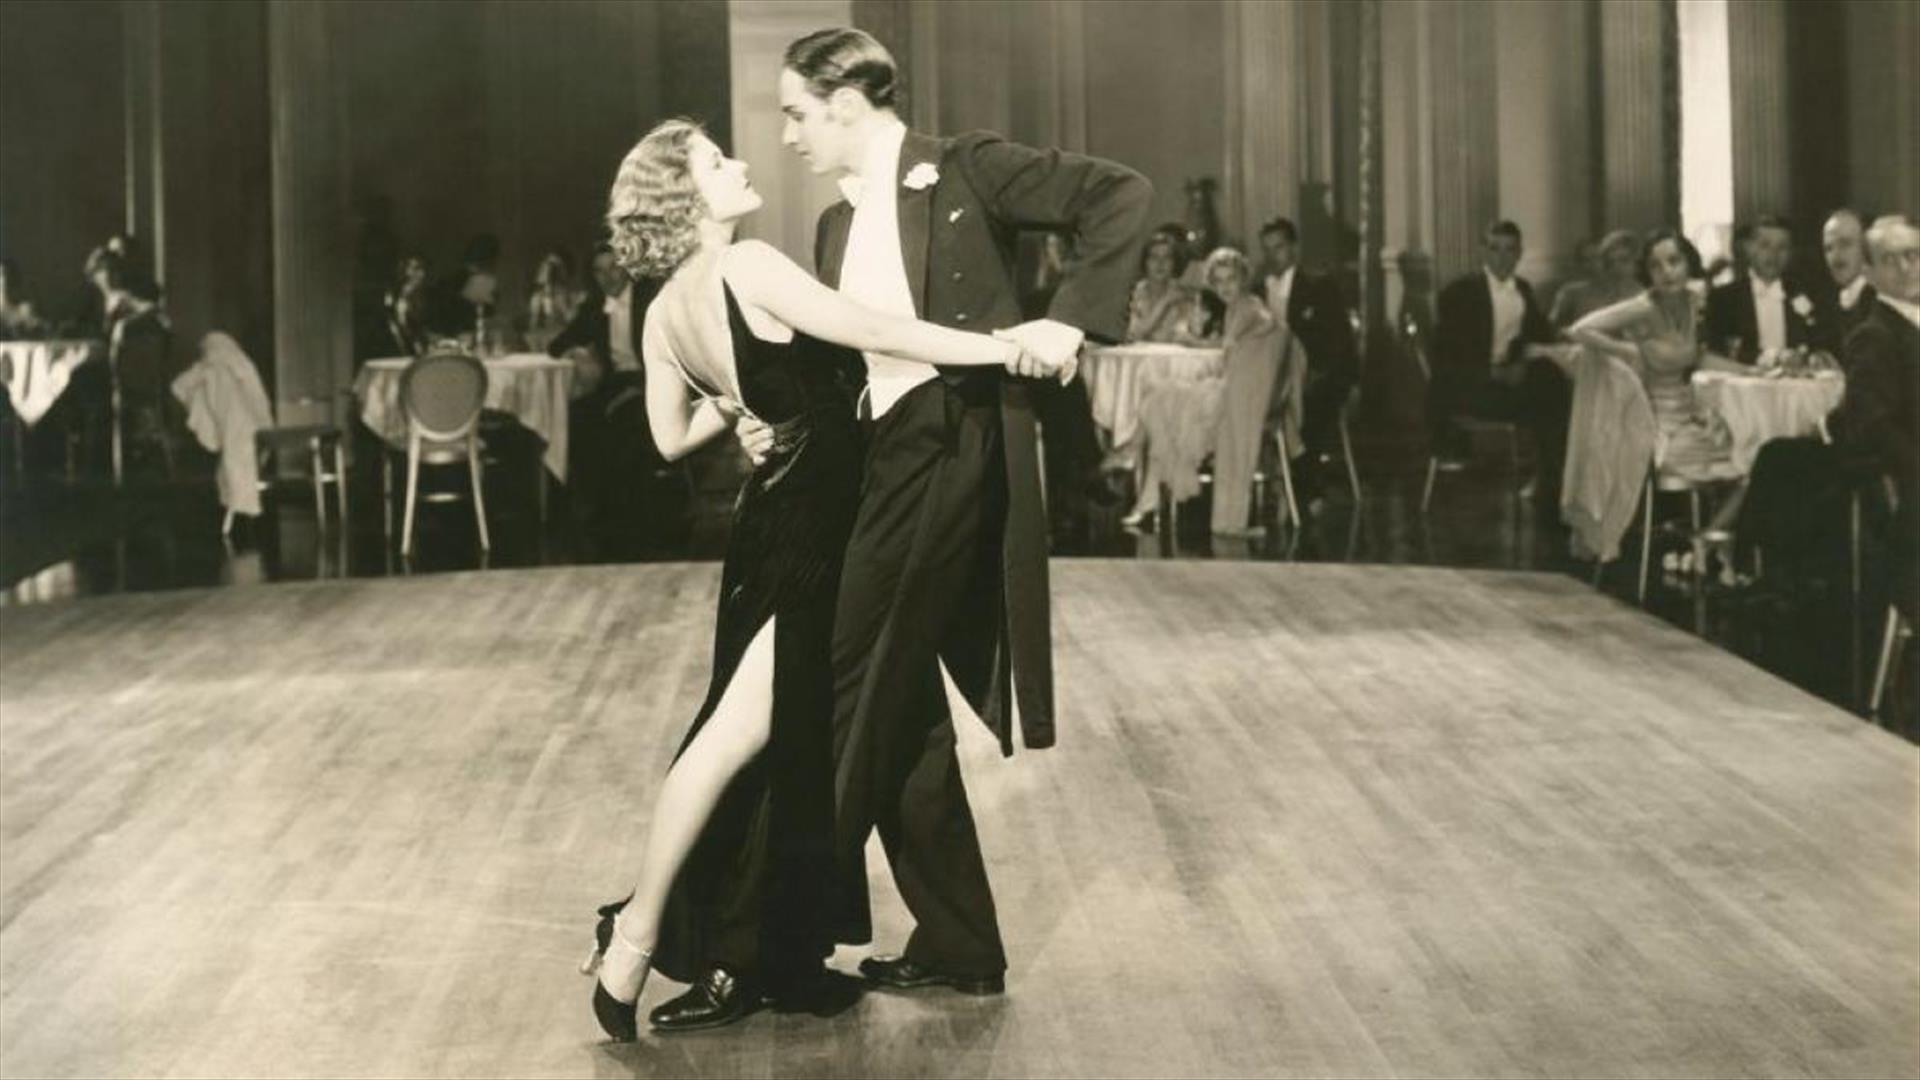 1930s dancers black & white photograph